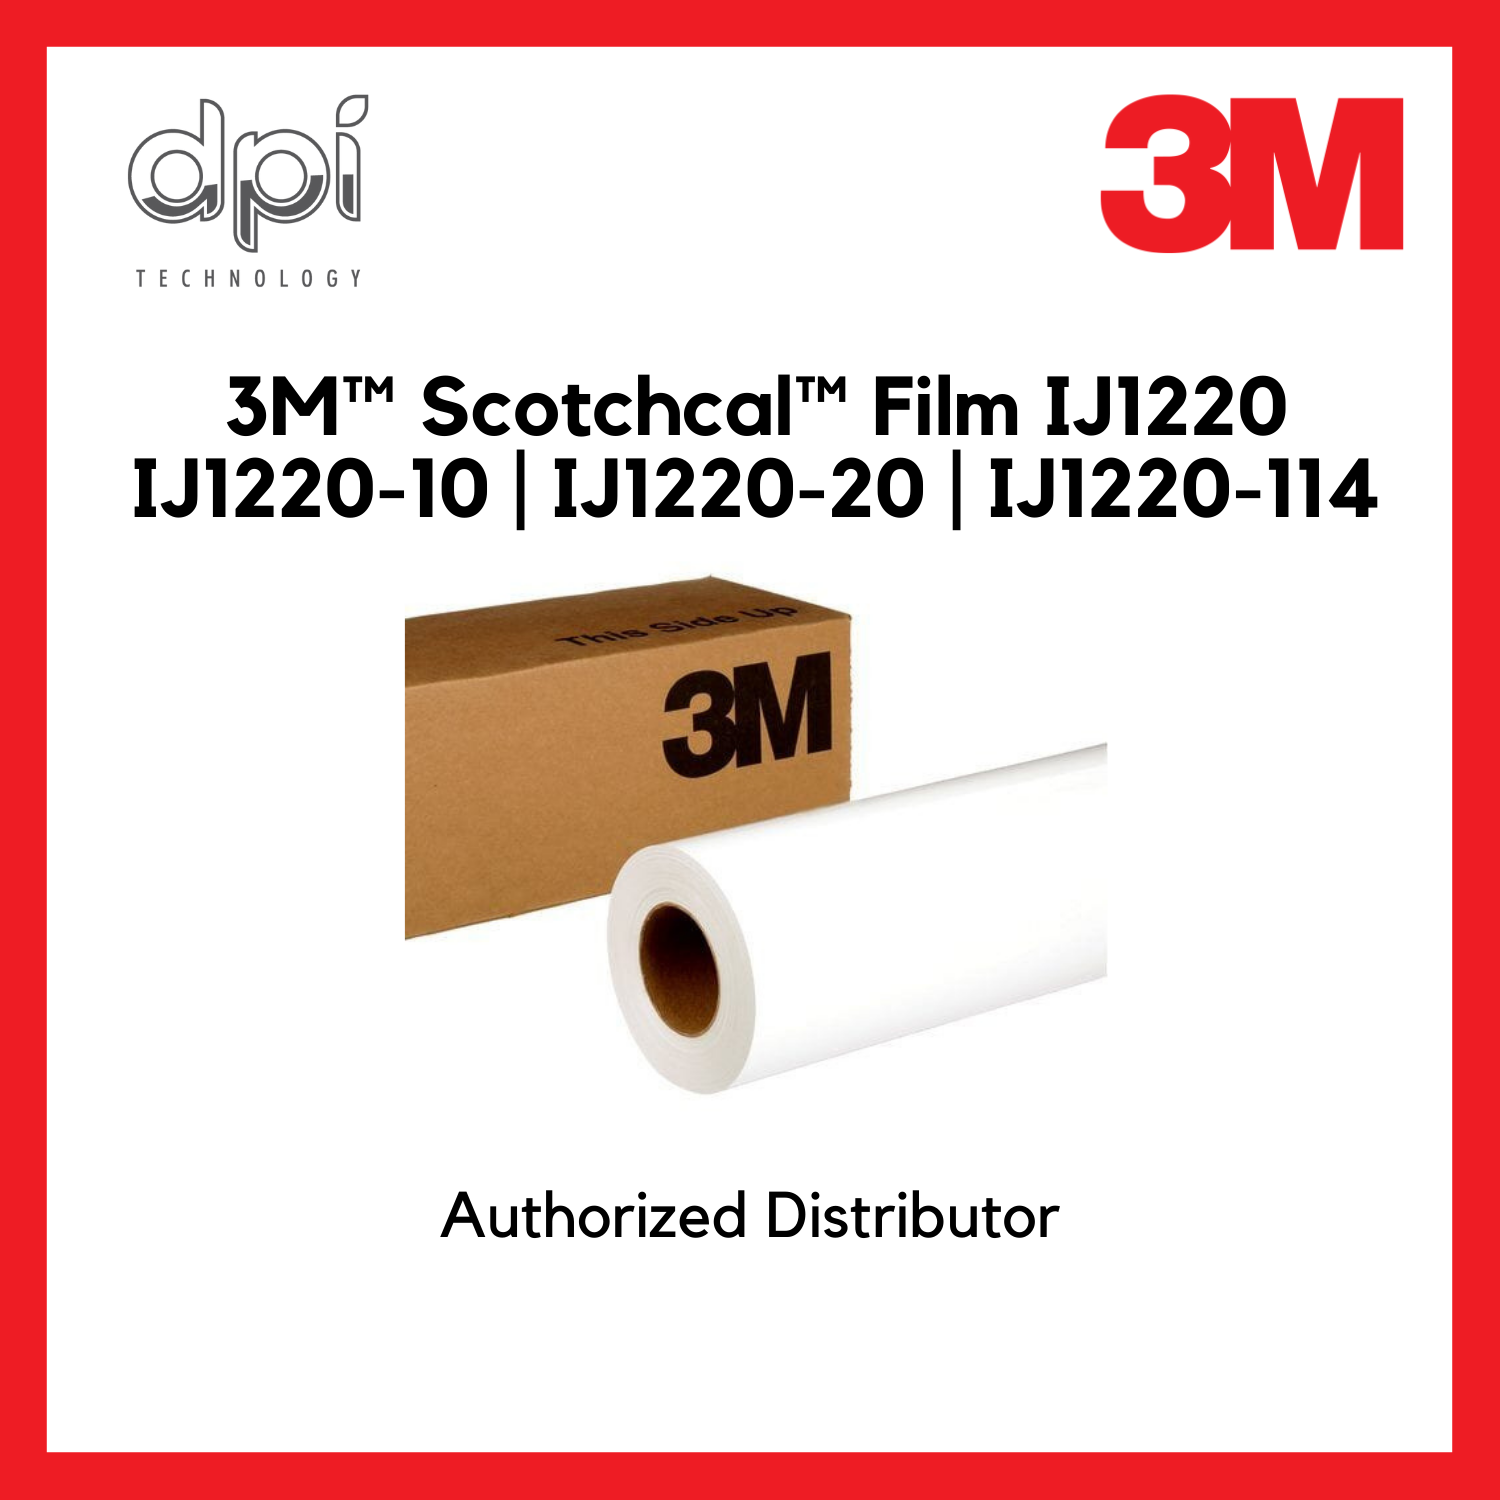 3M Scotchcal Film IJ1220